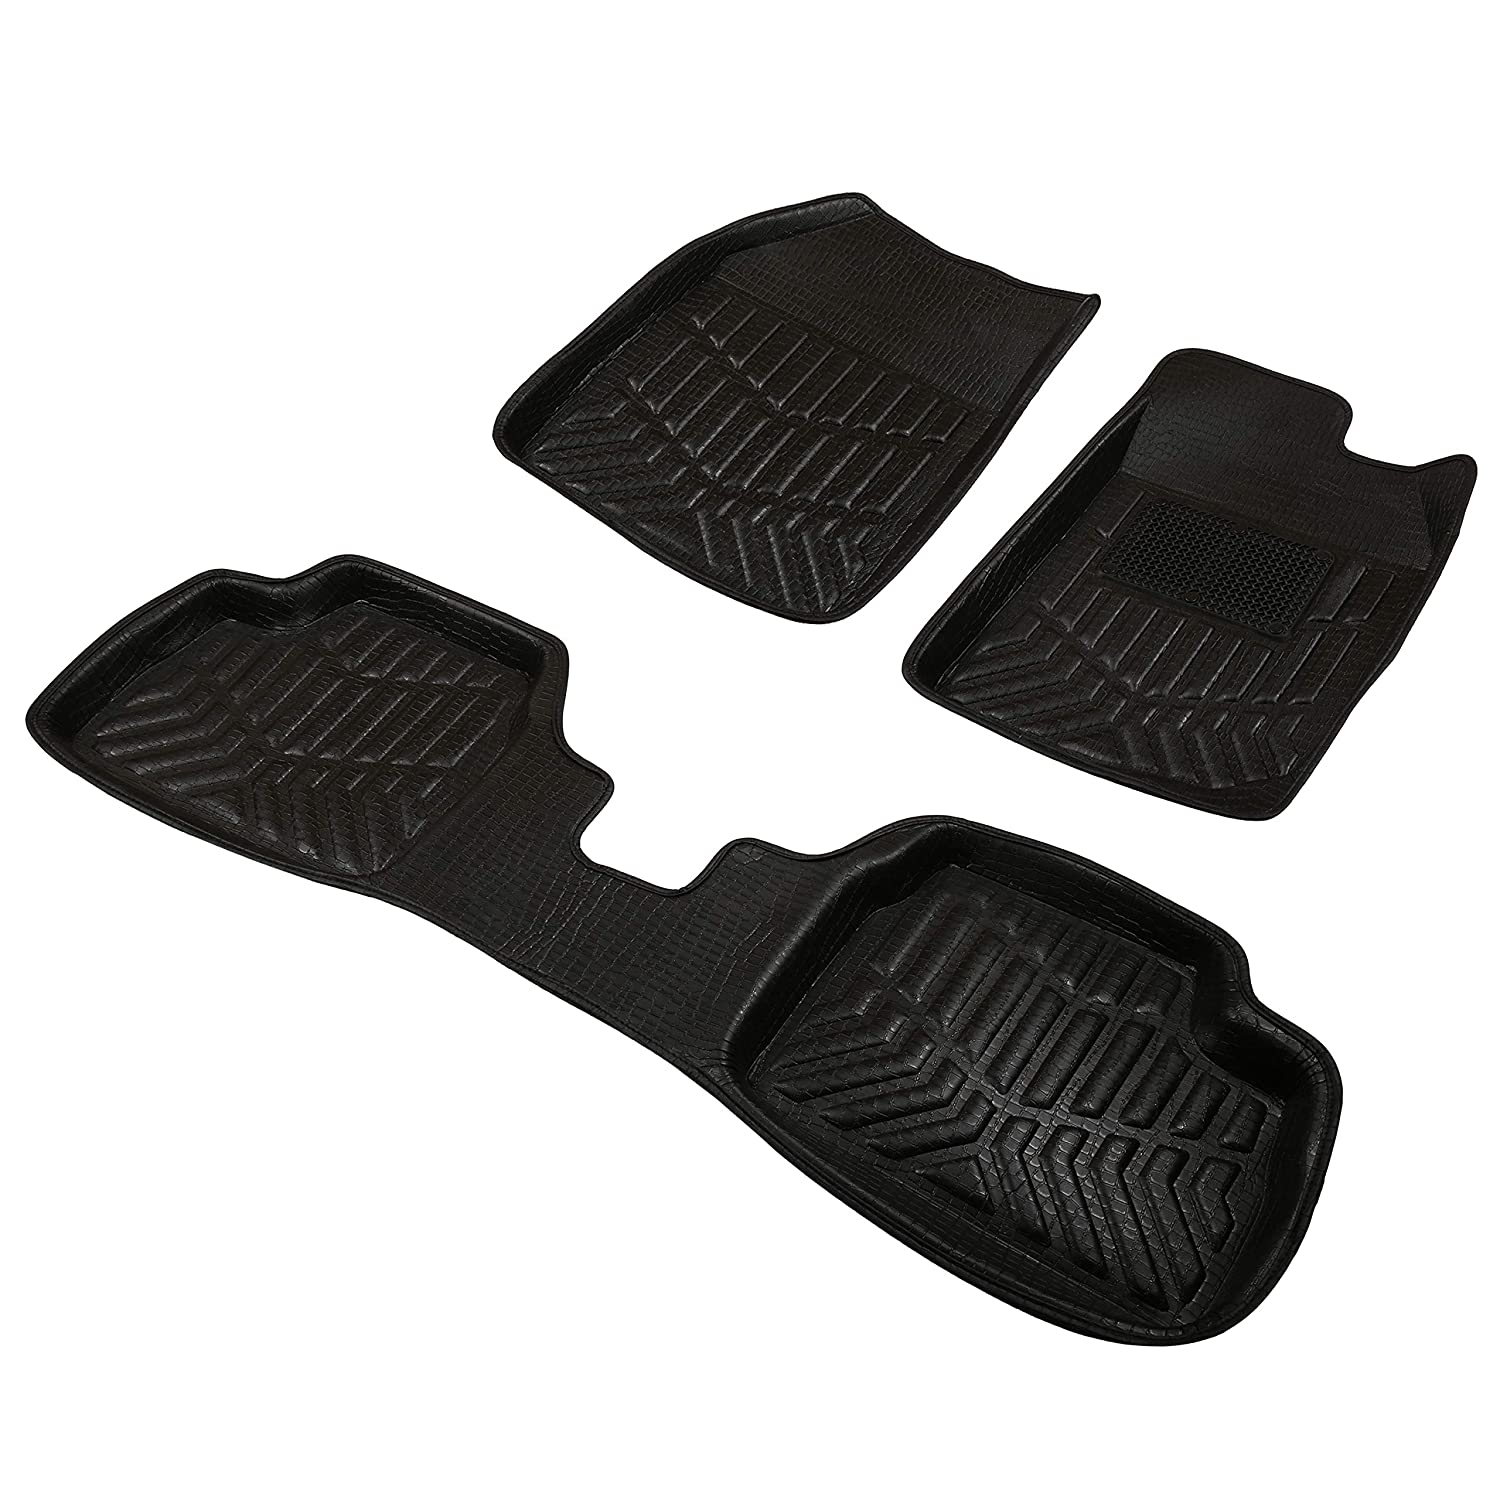 Drivn 3D Customised Car Floor Mat for Toyota Etios - Black (Set of 3)